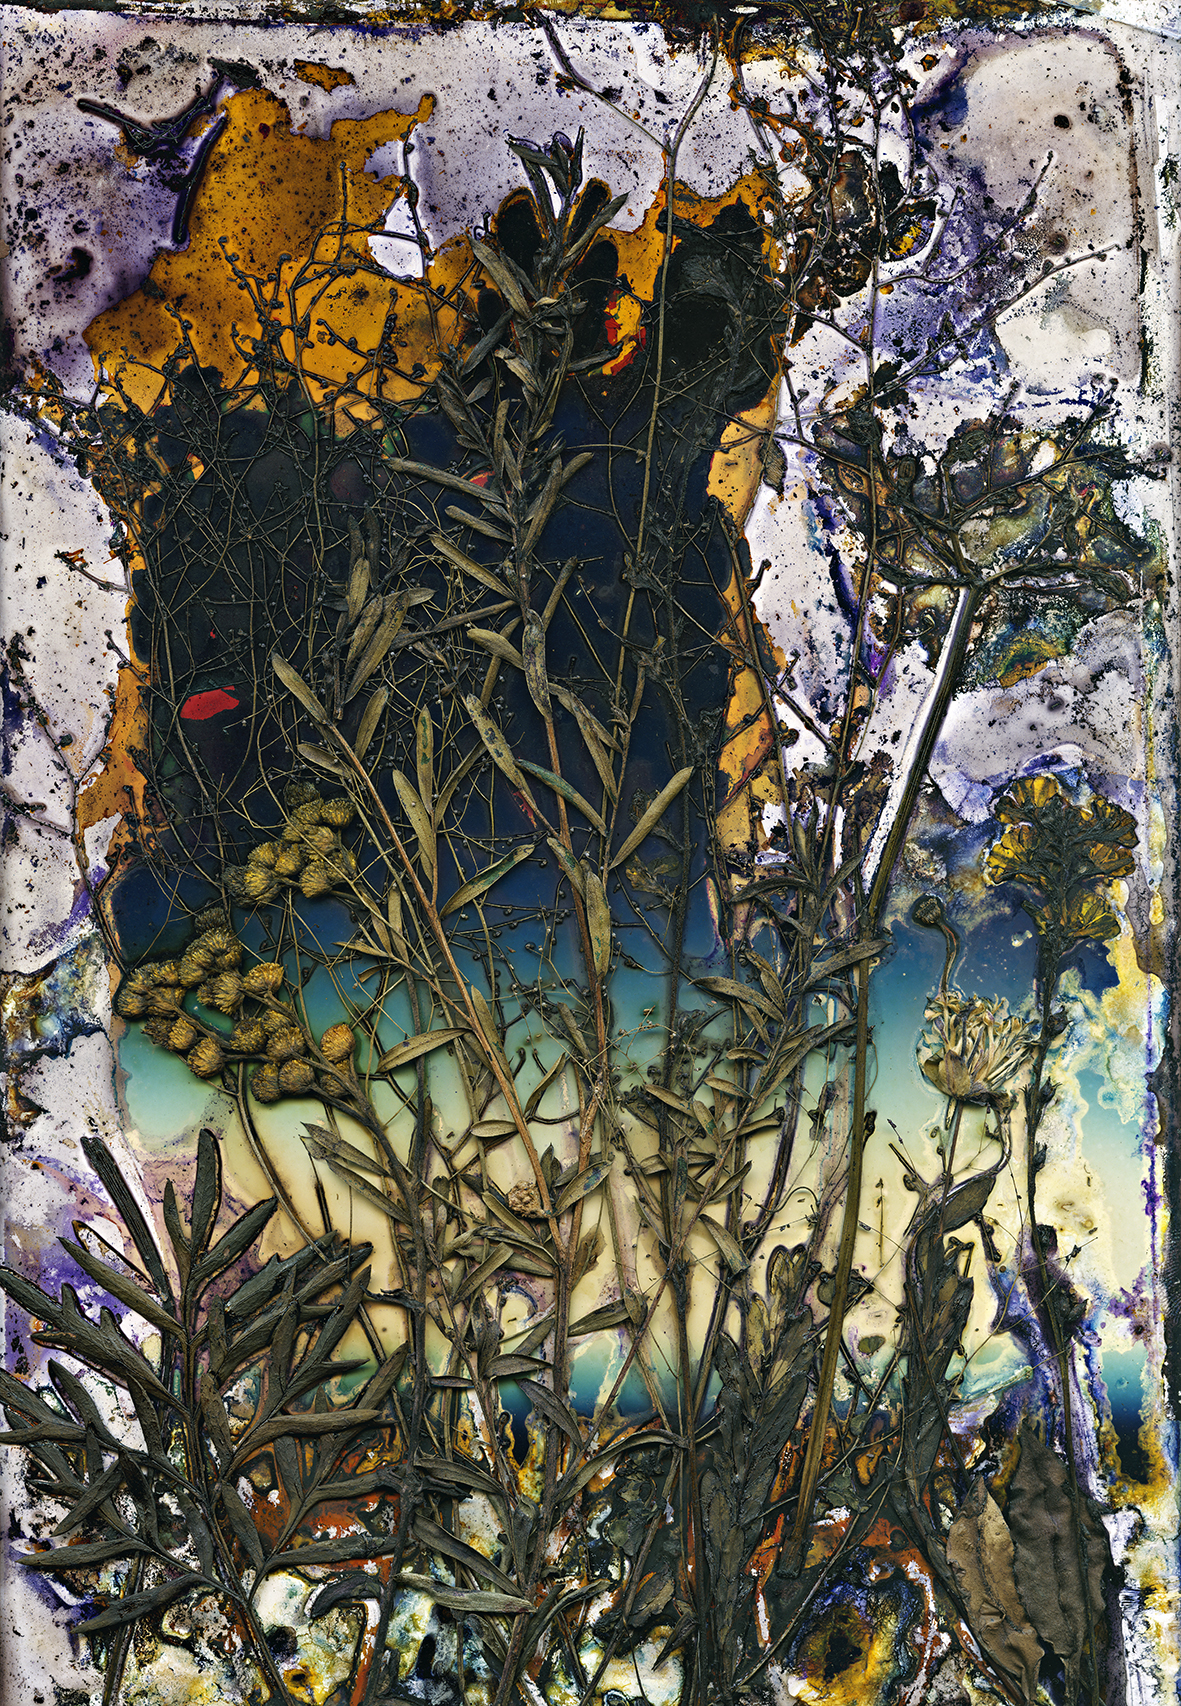 Wildflowers of the Granite Belt Belt: Out of Oblivion by Renata Buziak